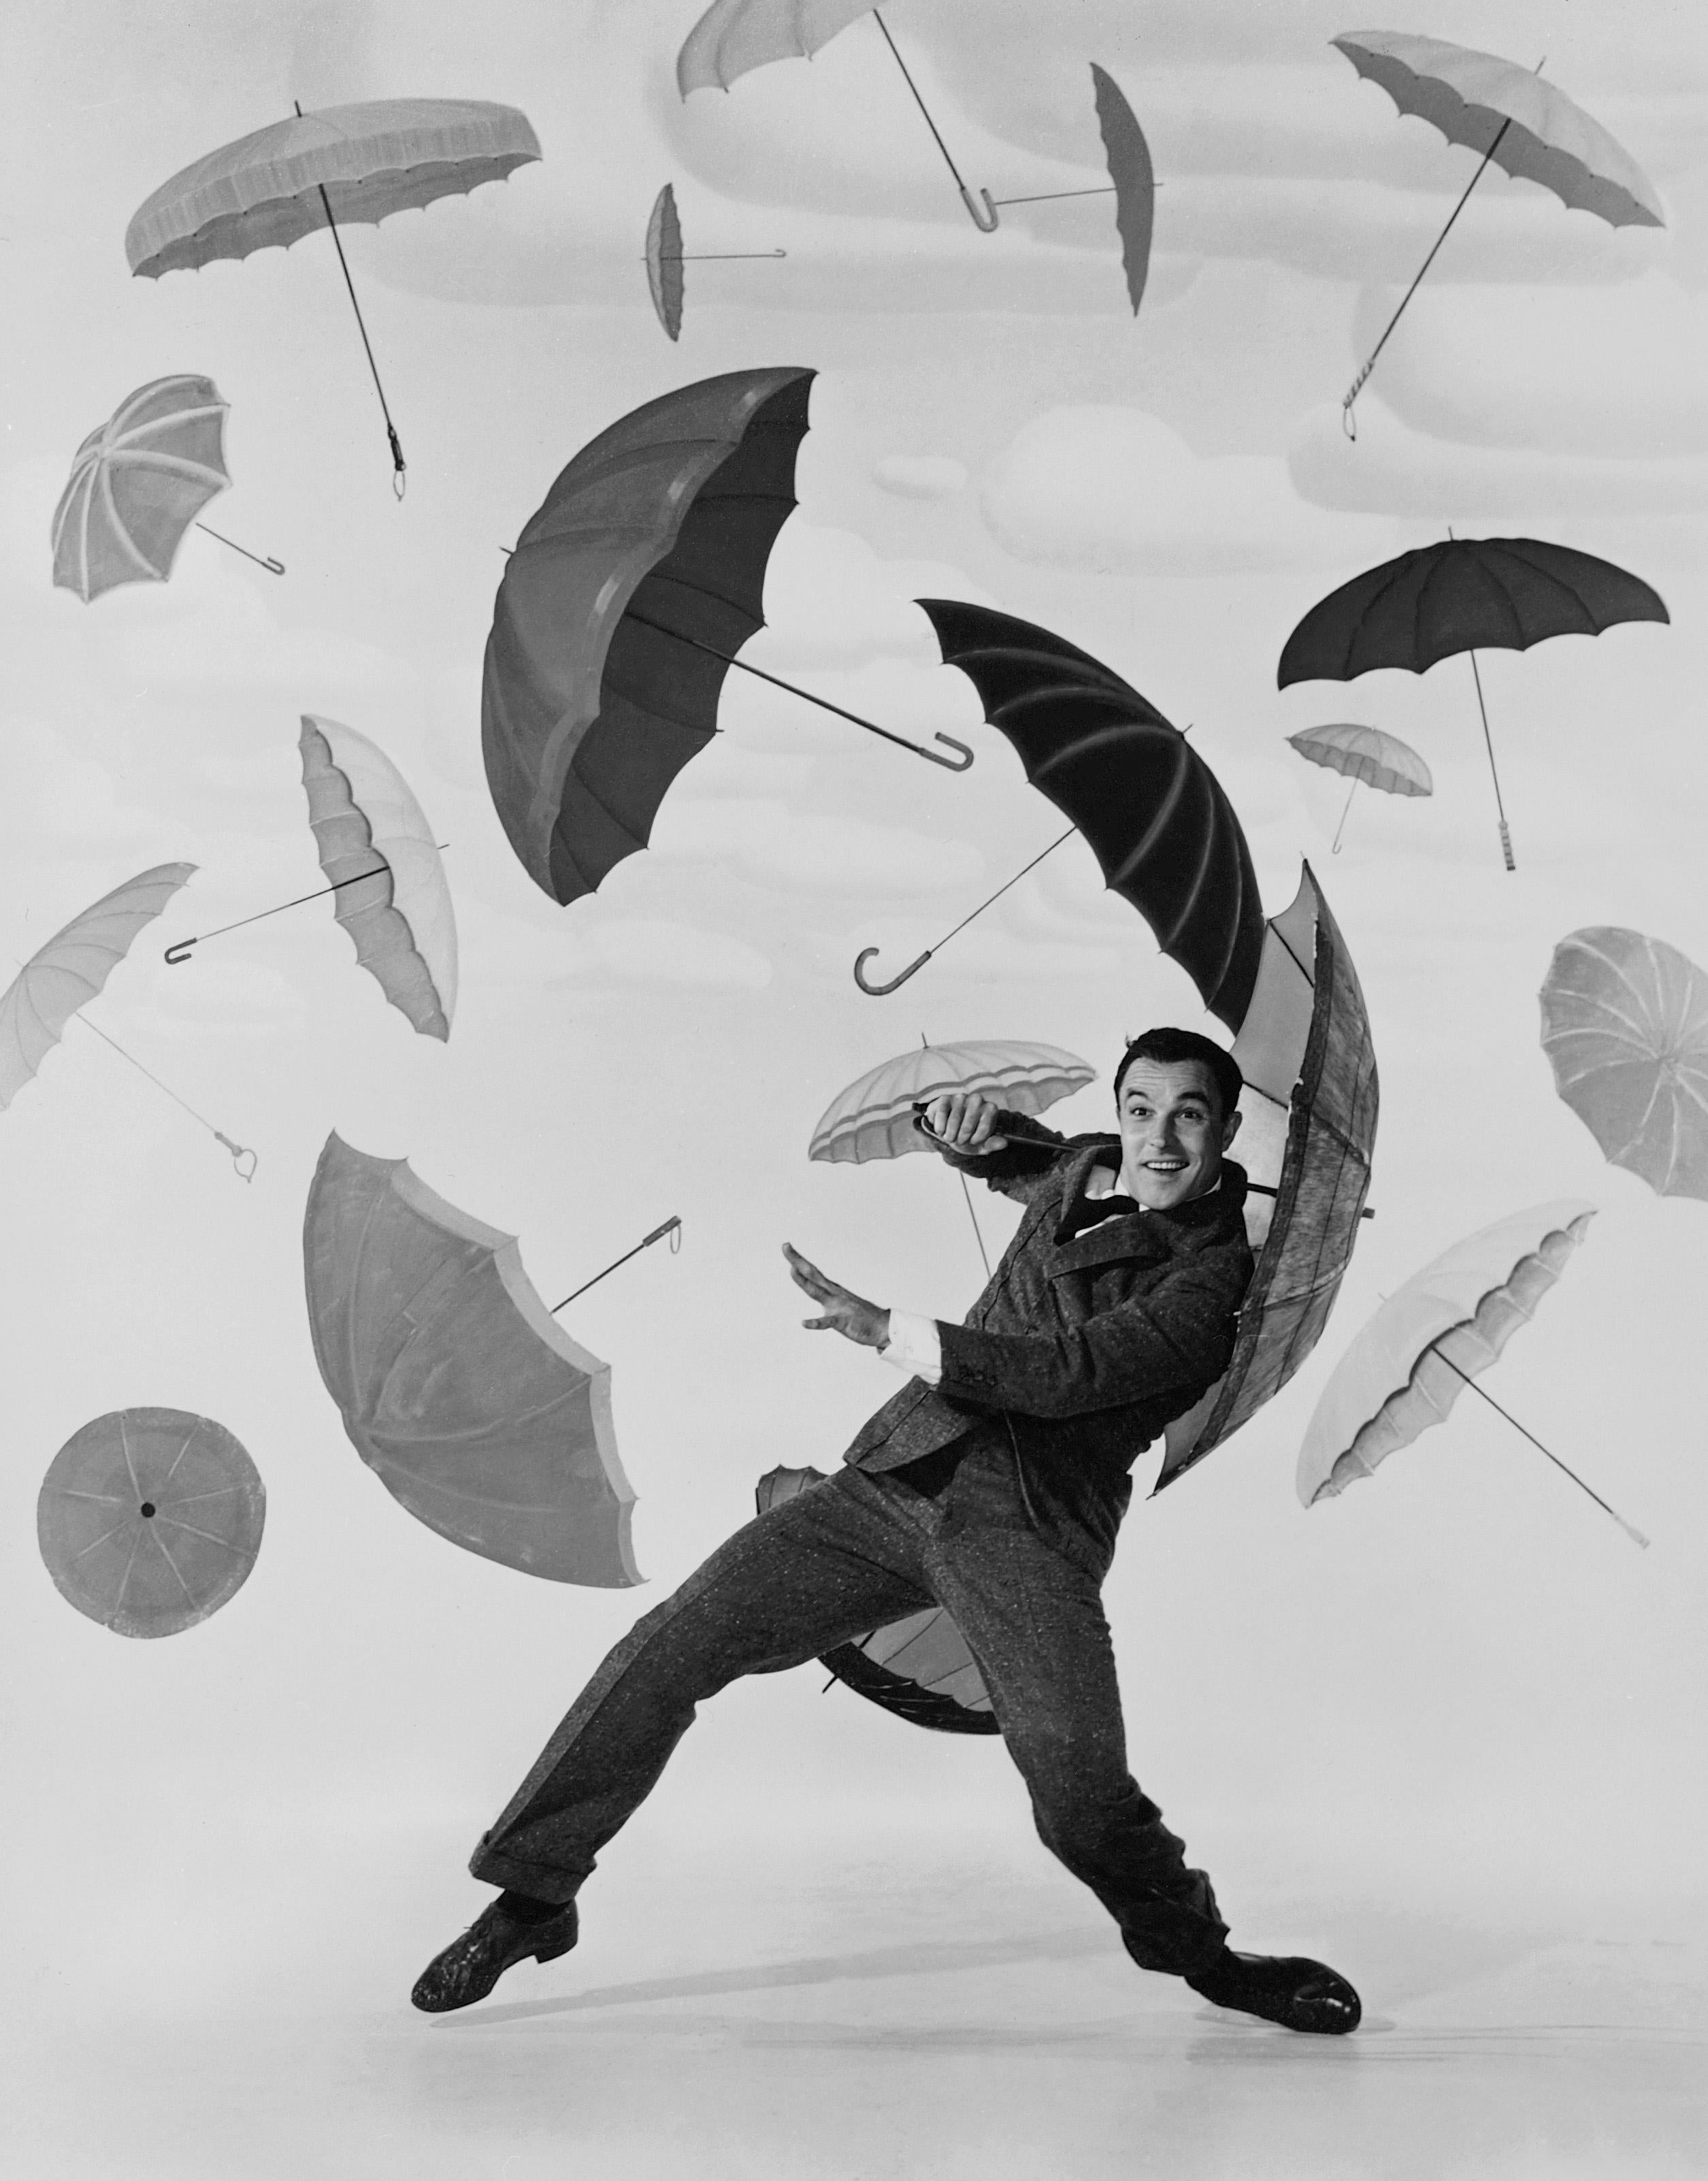 Unknown Black and White Photograph - Gene Kelly "Singin' in the Rain" Globe Photos Fine Art Print